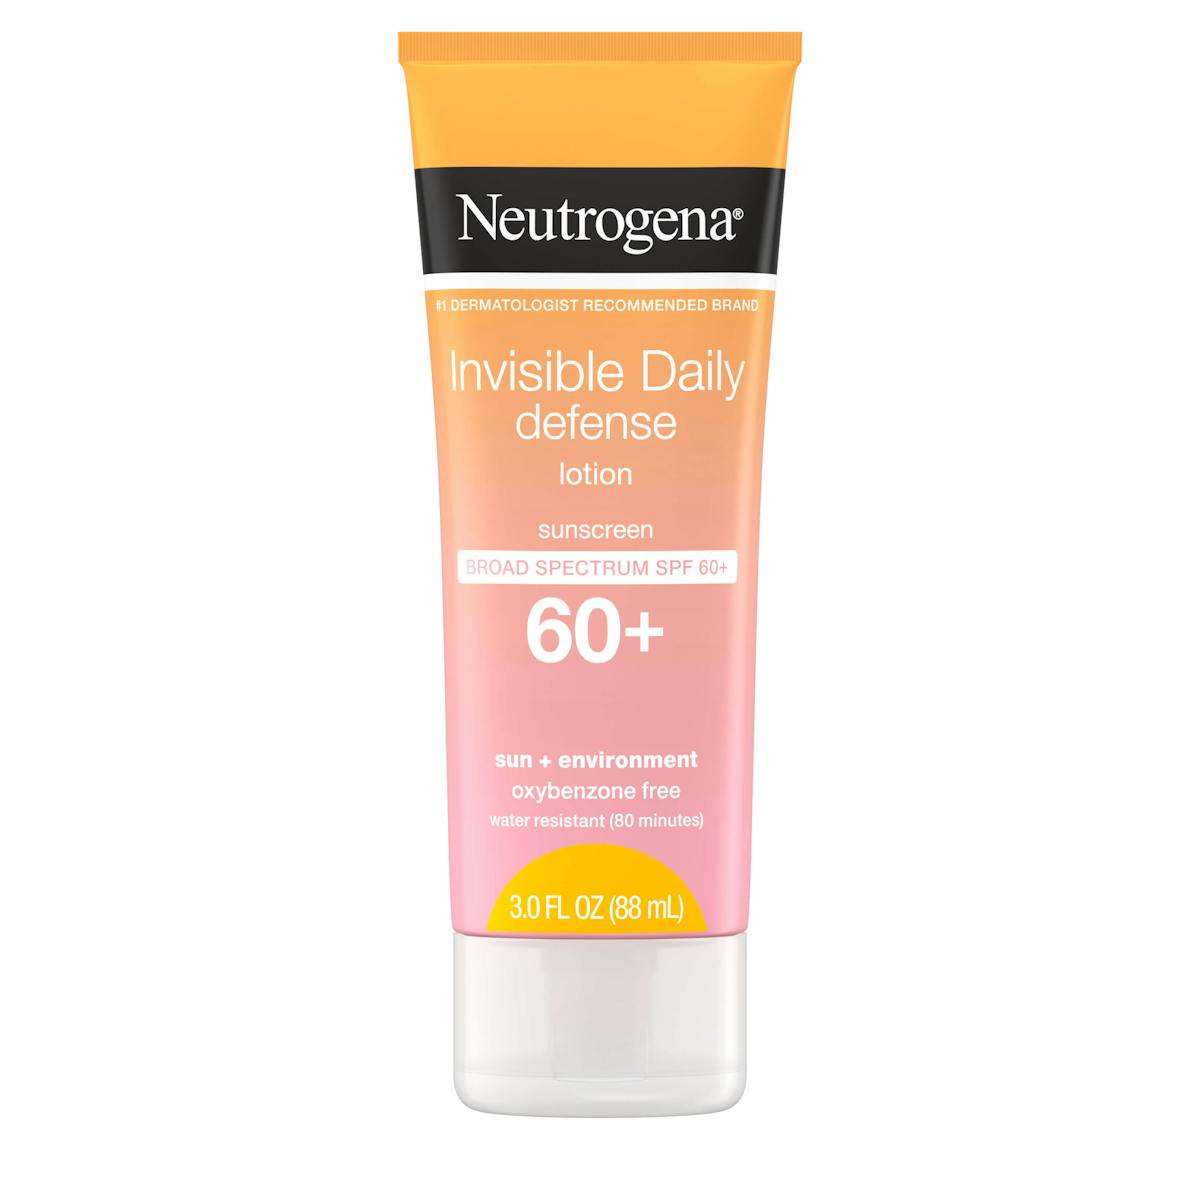 Invisible Daily Defense Non-Comedogenic Sunscreen Lotion SPF 60+ | NEUTROGENAÂ®